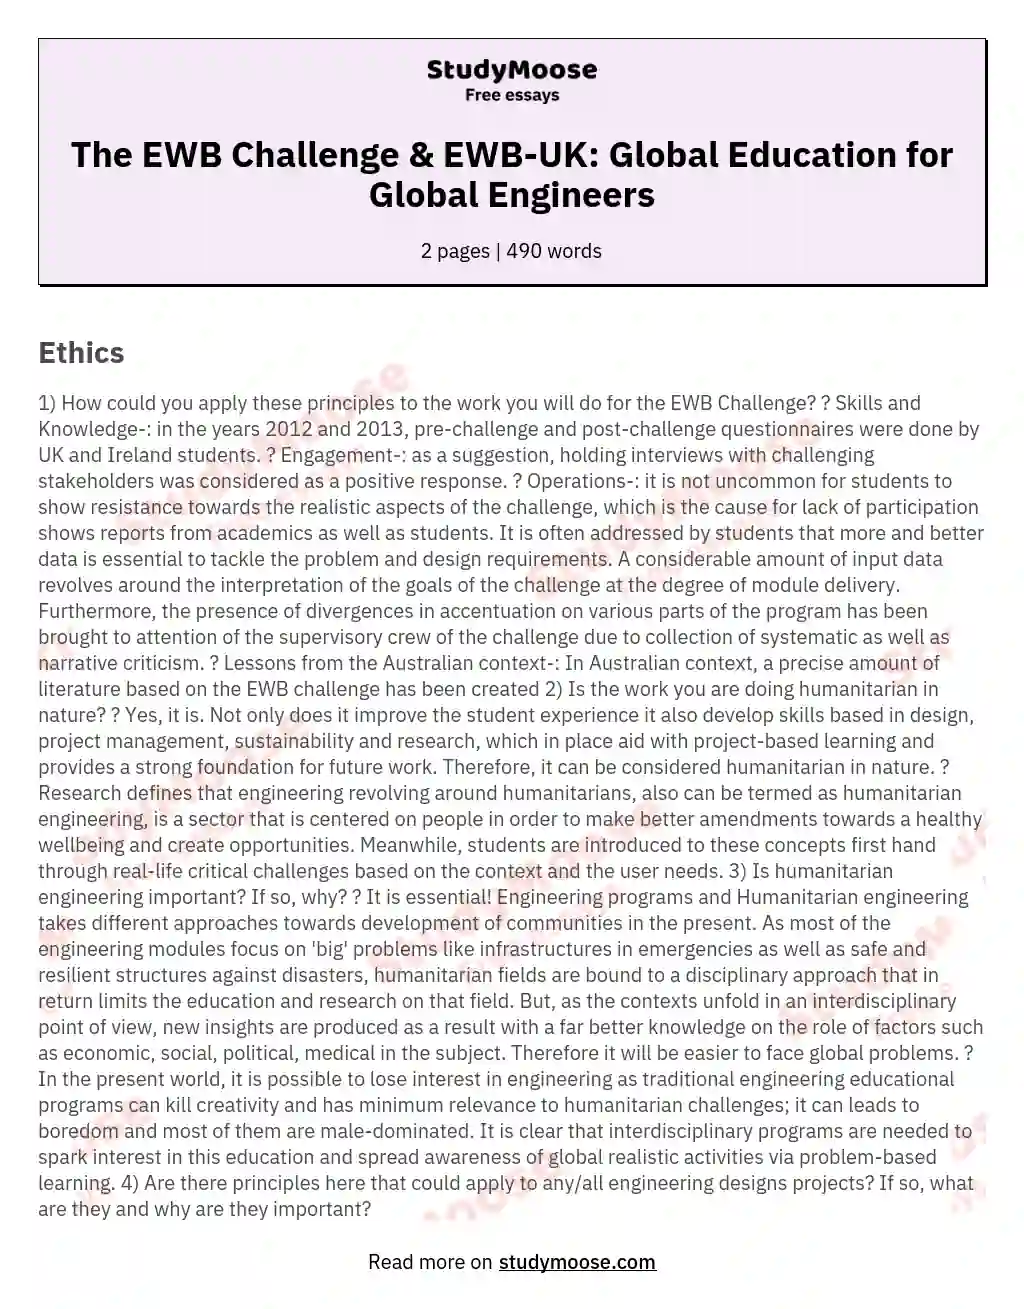 The EWB Challenge & EWB-UK: Global Education for Global Engineers